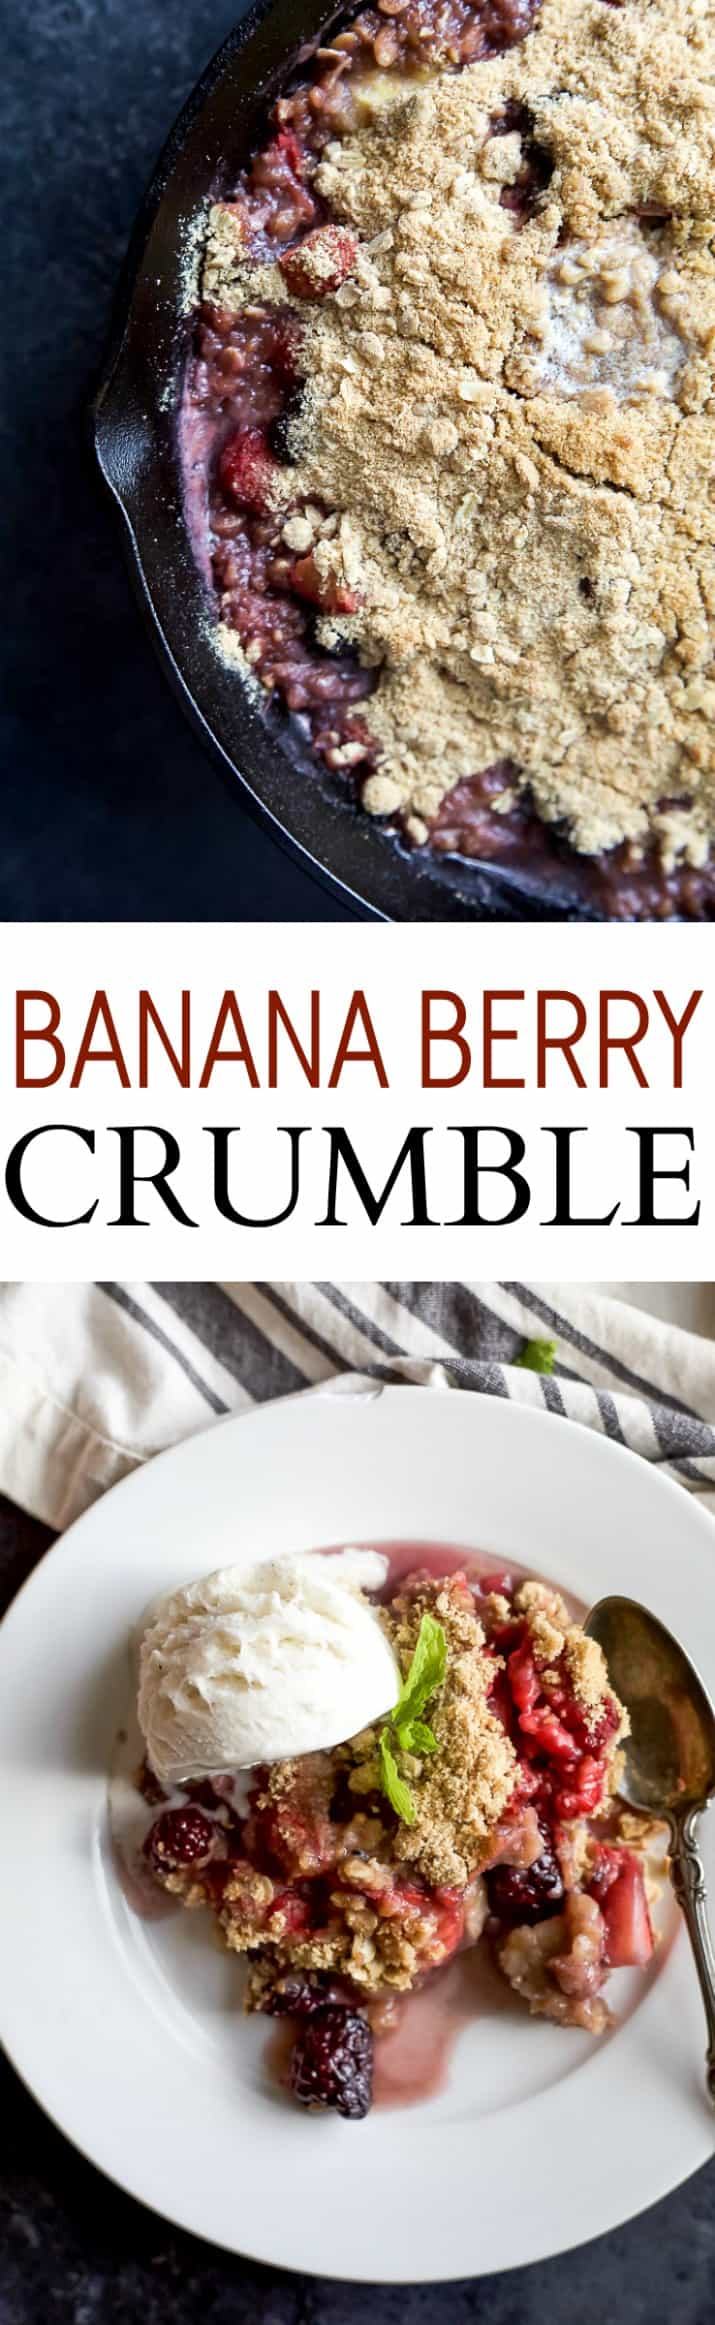 Banana Berry Crumble Recipe